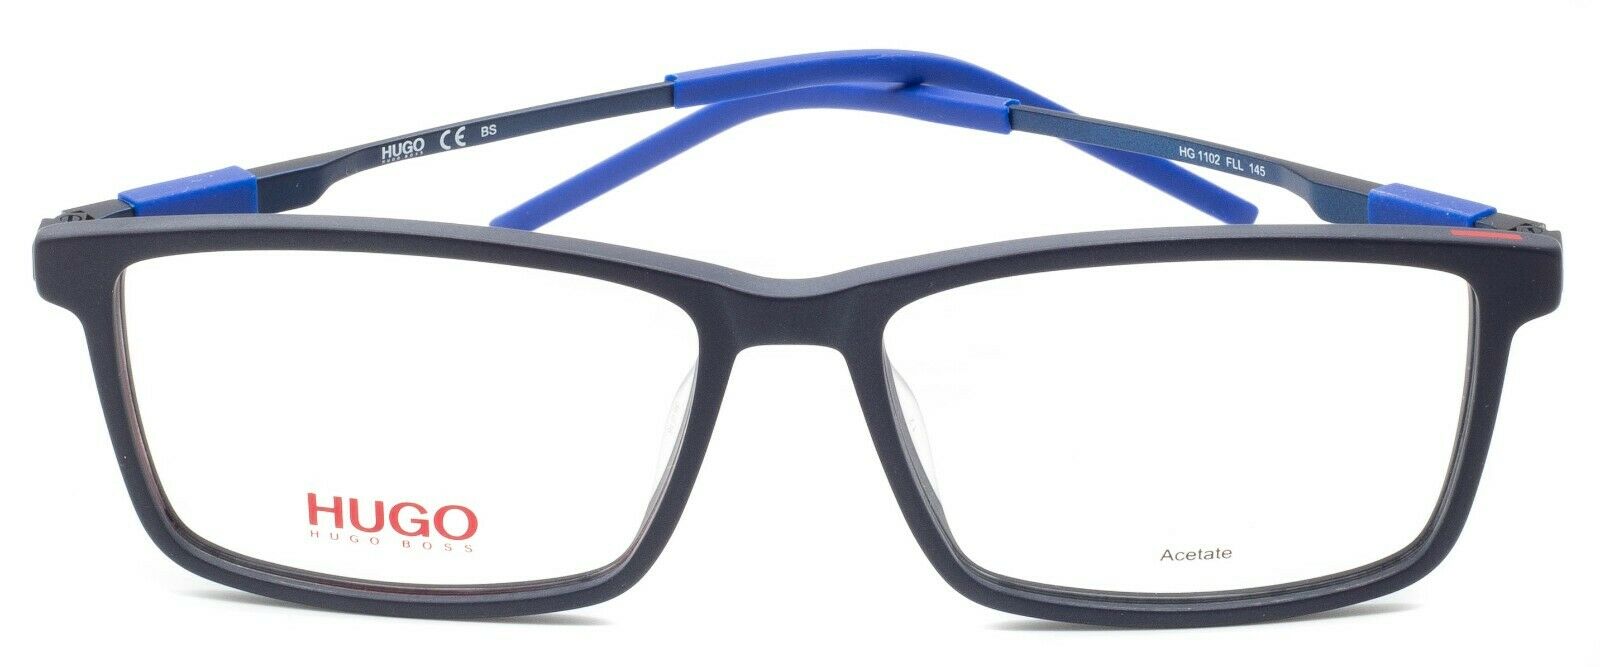 HUGO BOSS HG 1102 FLL 56mm Eyewear FRAMES Glasses RX Optical Eyeglasses ...